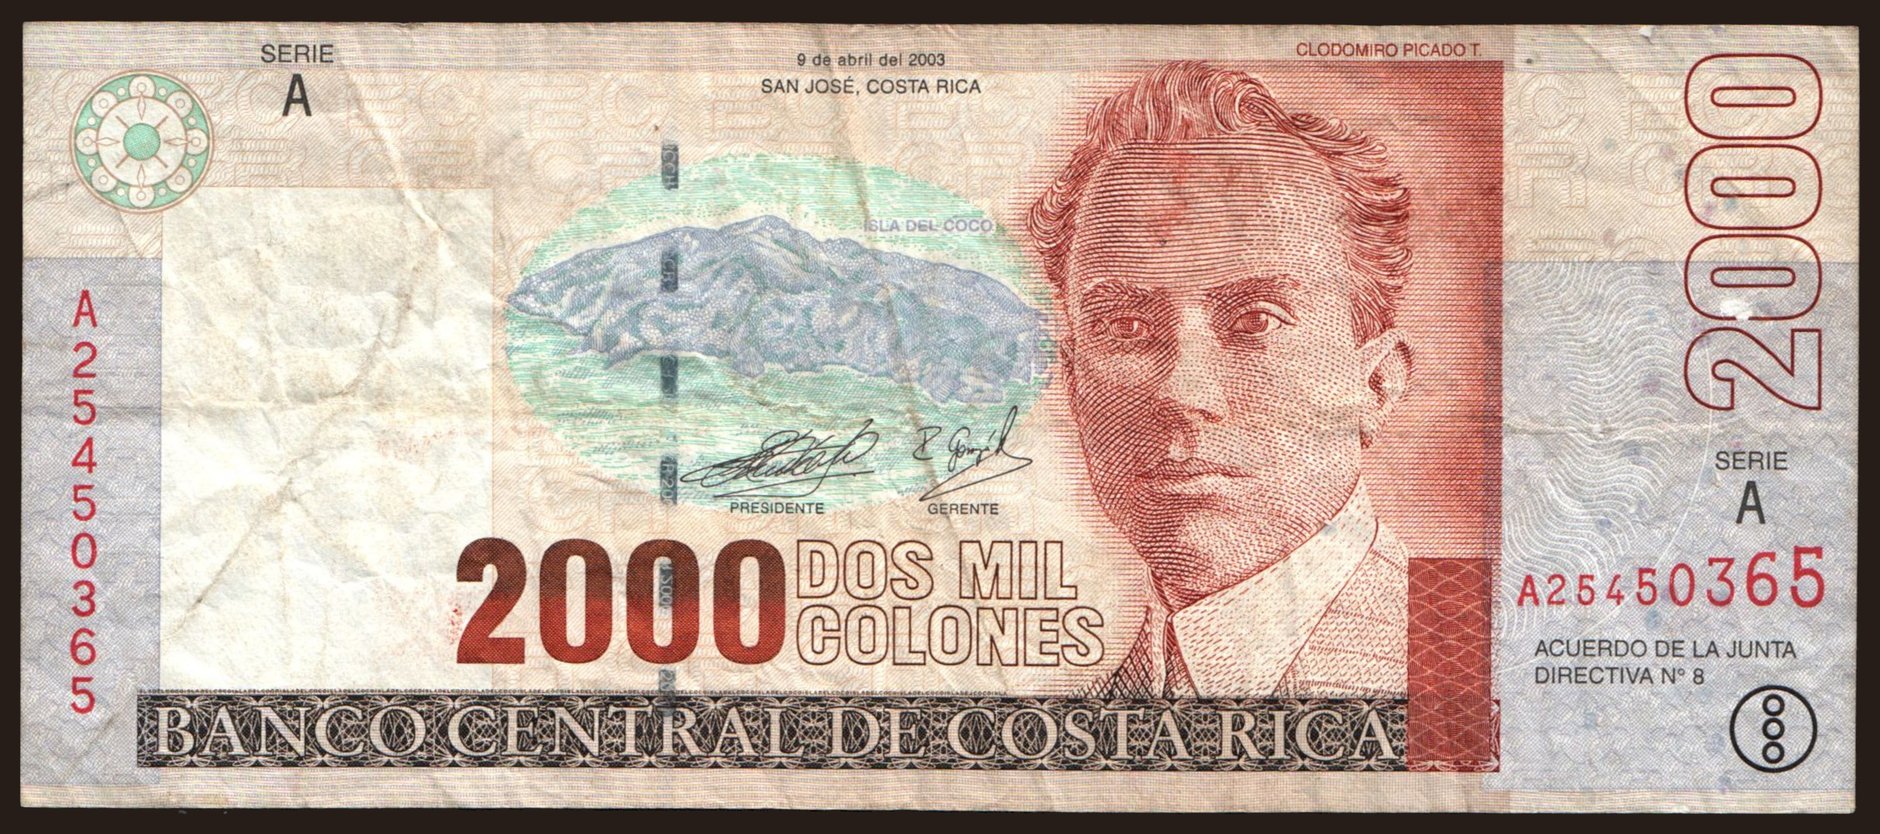 2000 colones, 2003